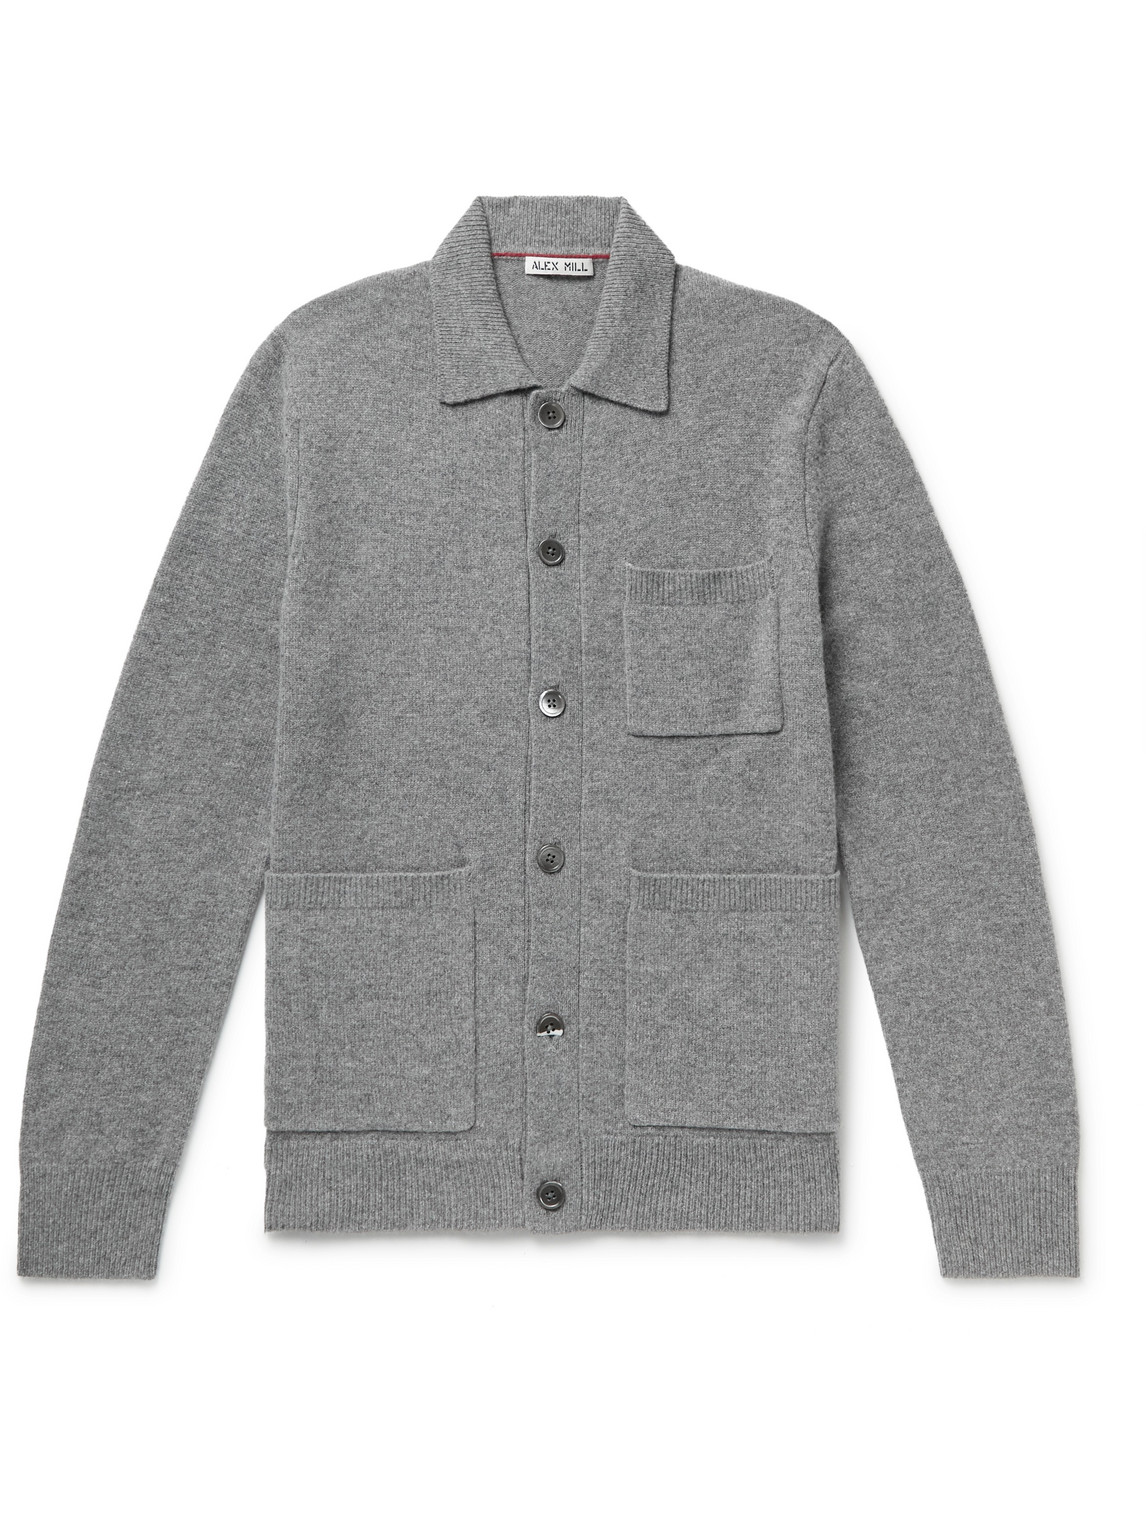 Alex Mill Merino Wool Shirt Jacket In Gray